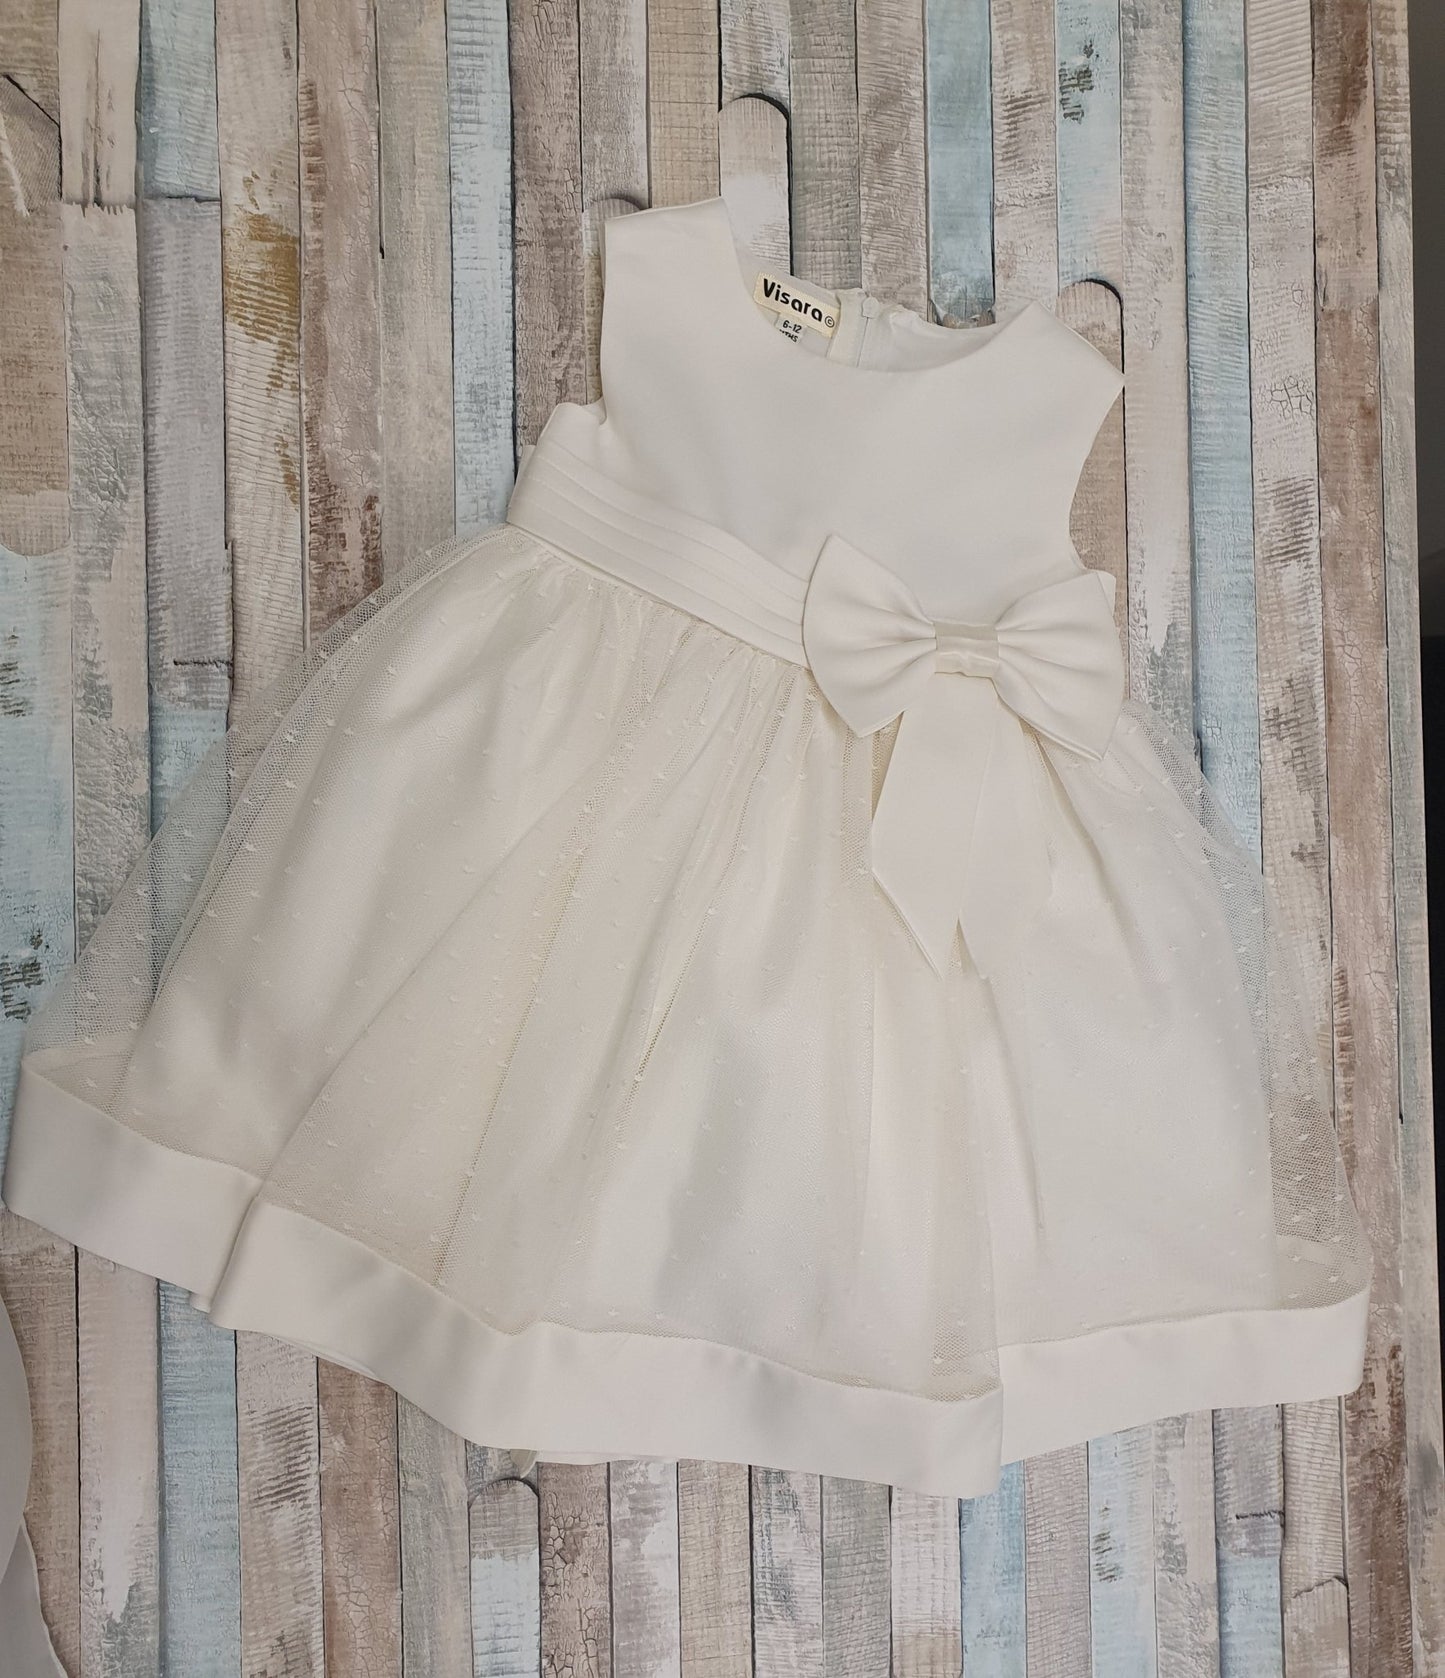 Visara Cream Satin Overlay Dress - Nana B Baby & Childrenswear Boutique